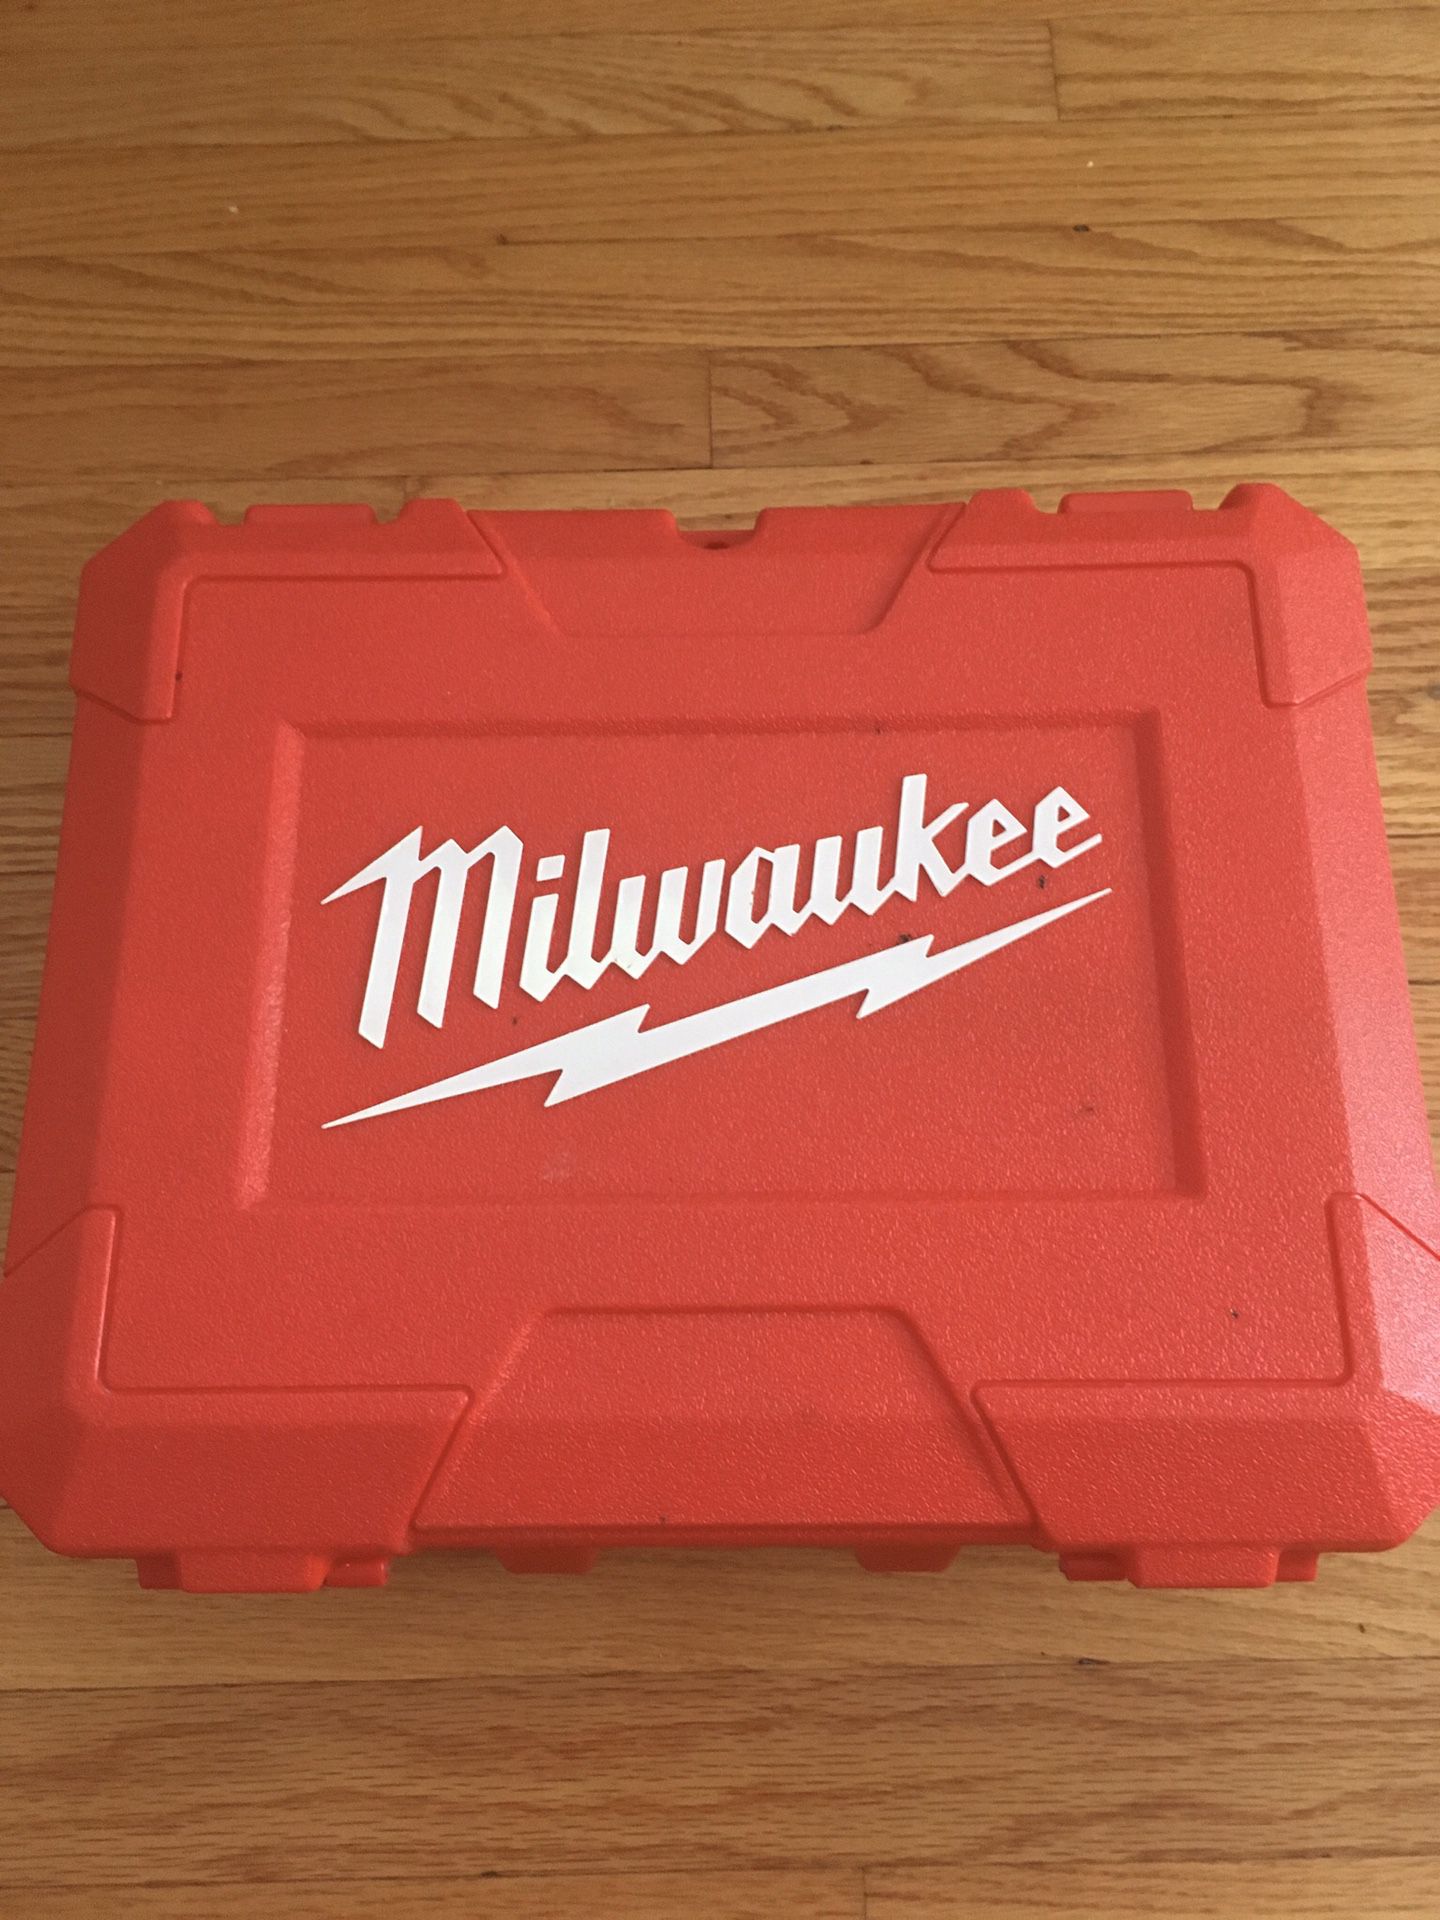 Milwaukee tool box